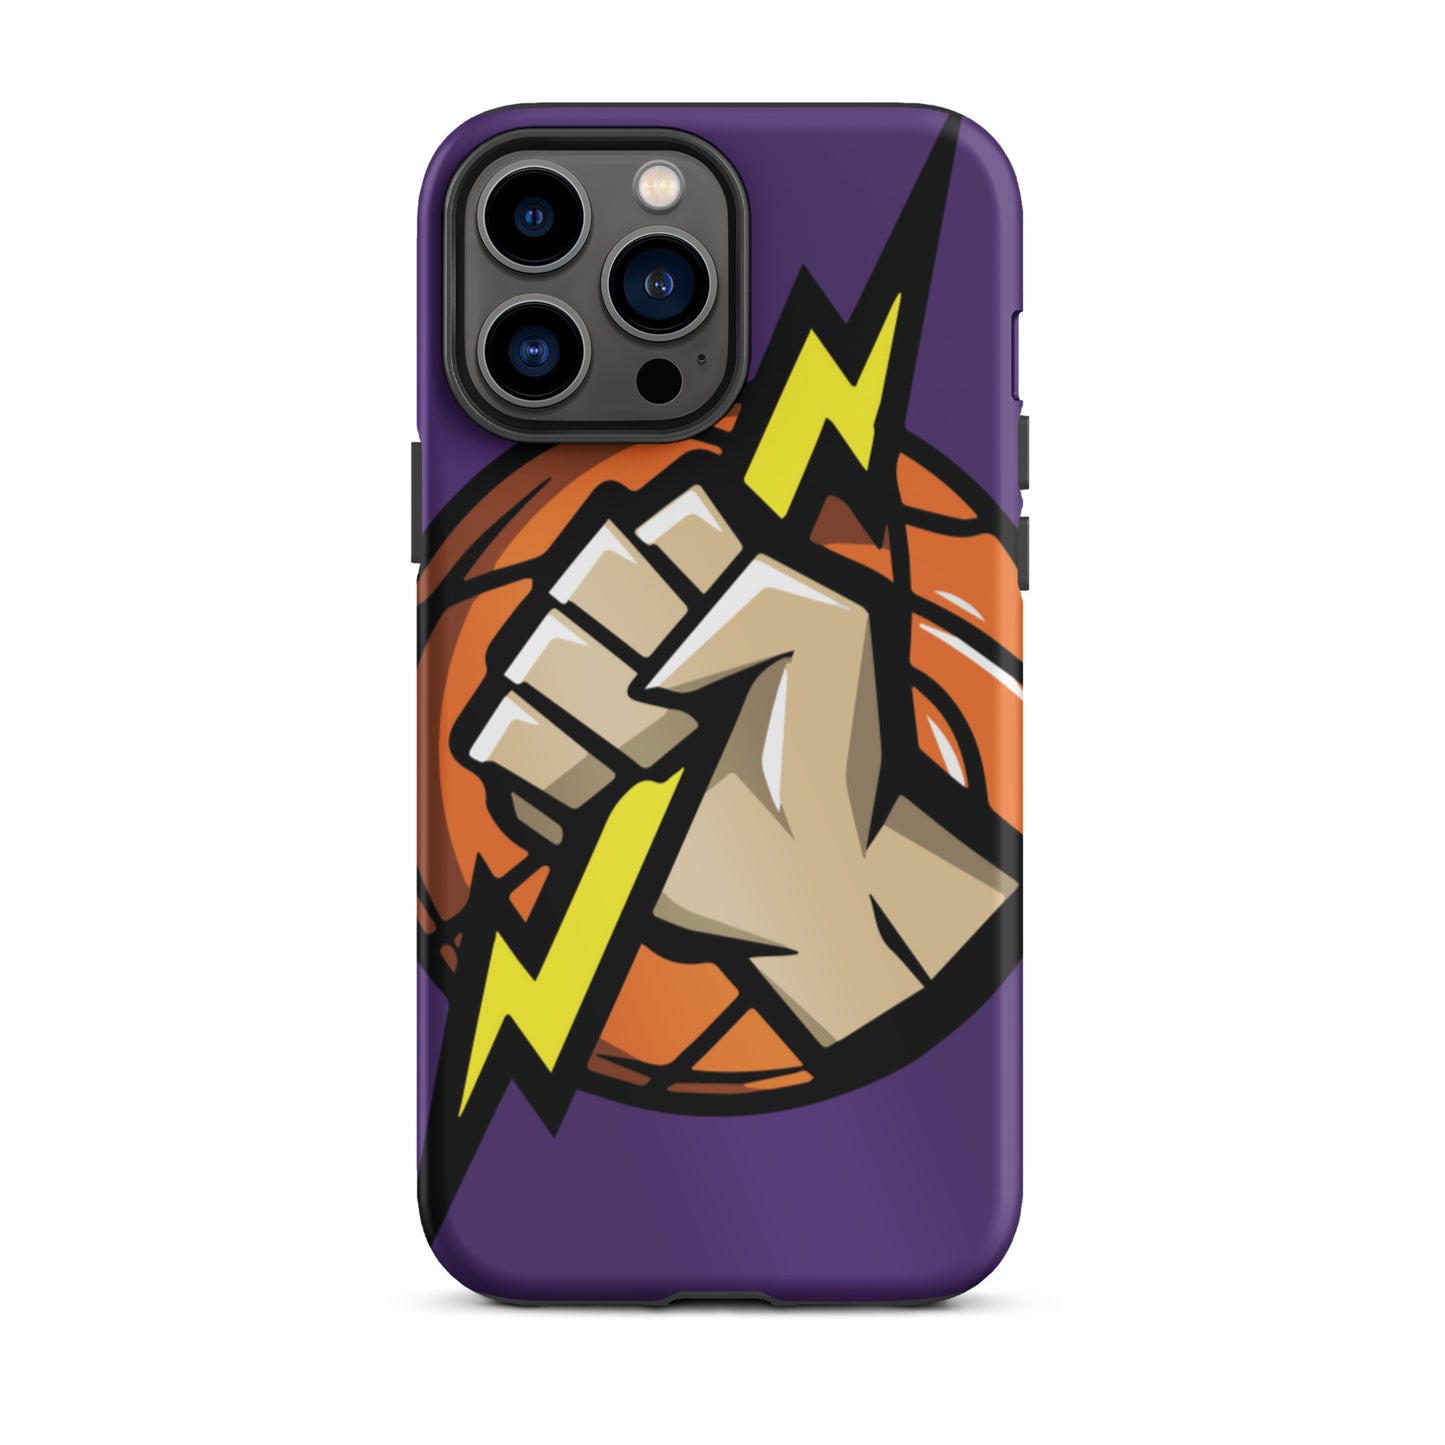 Thunder & Lightning iPhone case (Purple)